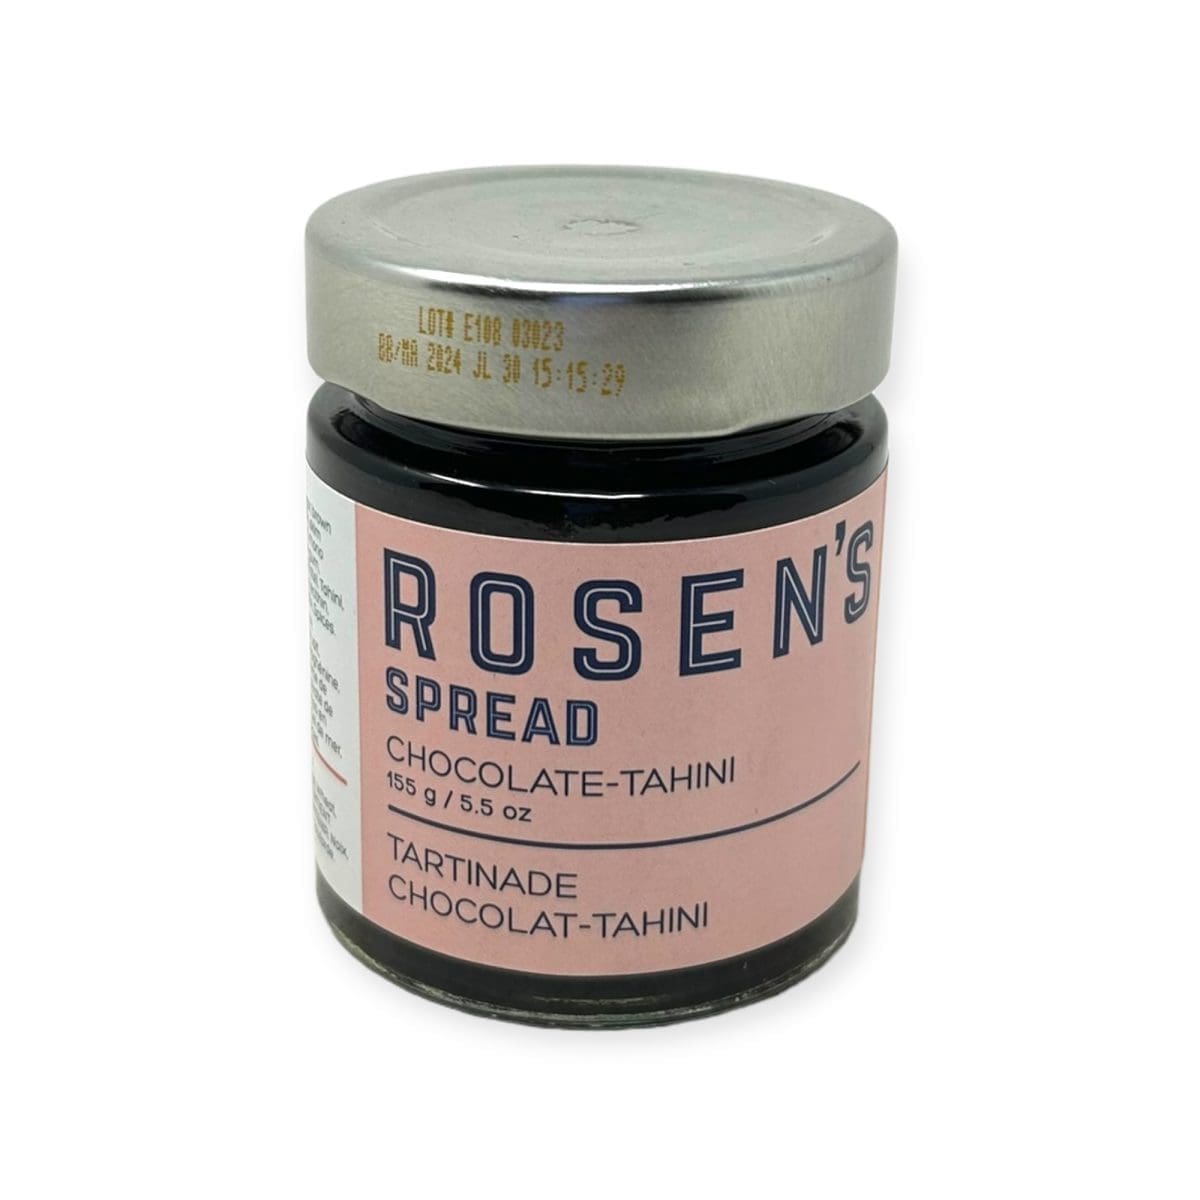 Rosen’s Spread Chocolate-Tahini (155g)